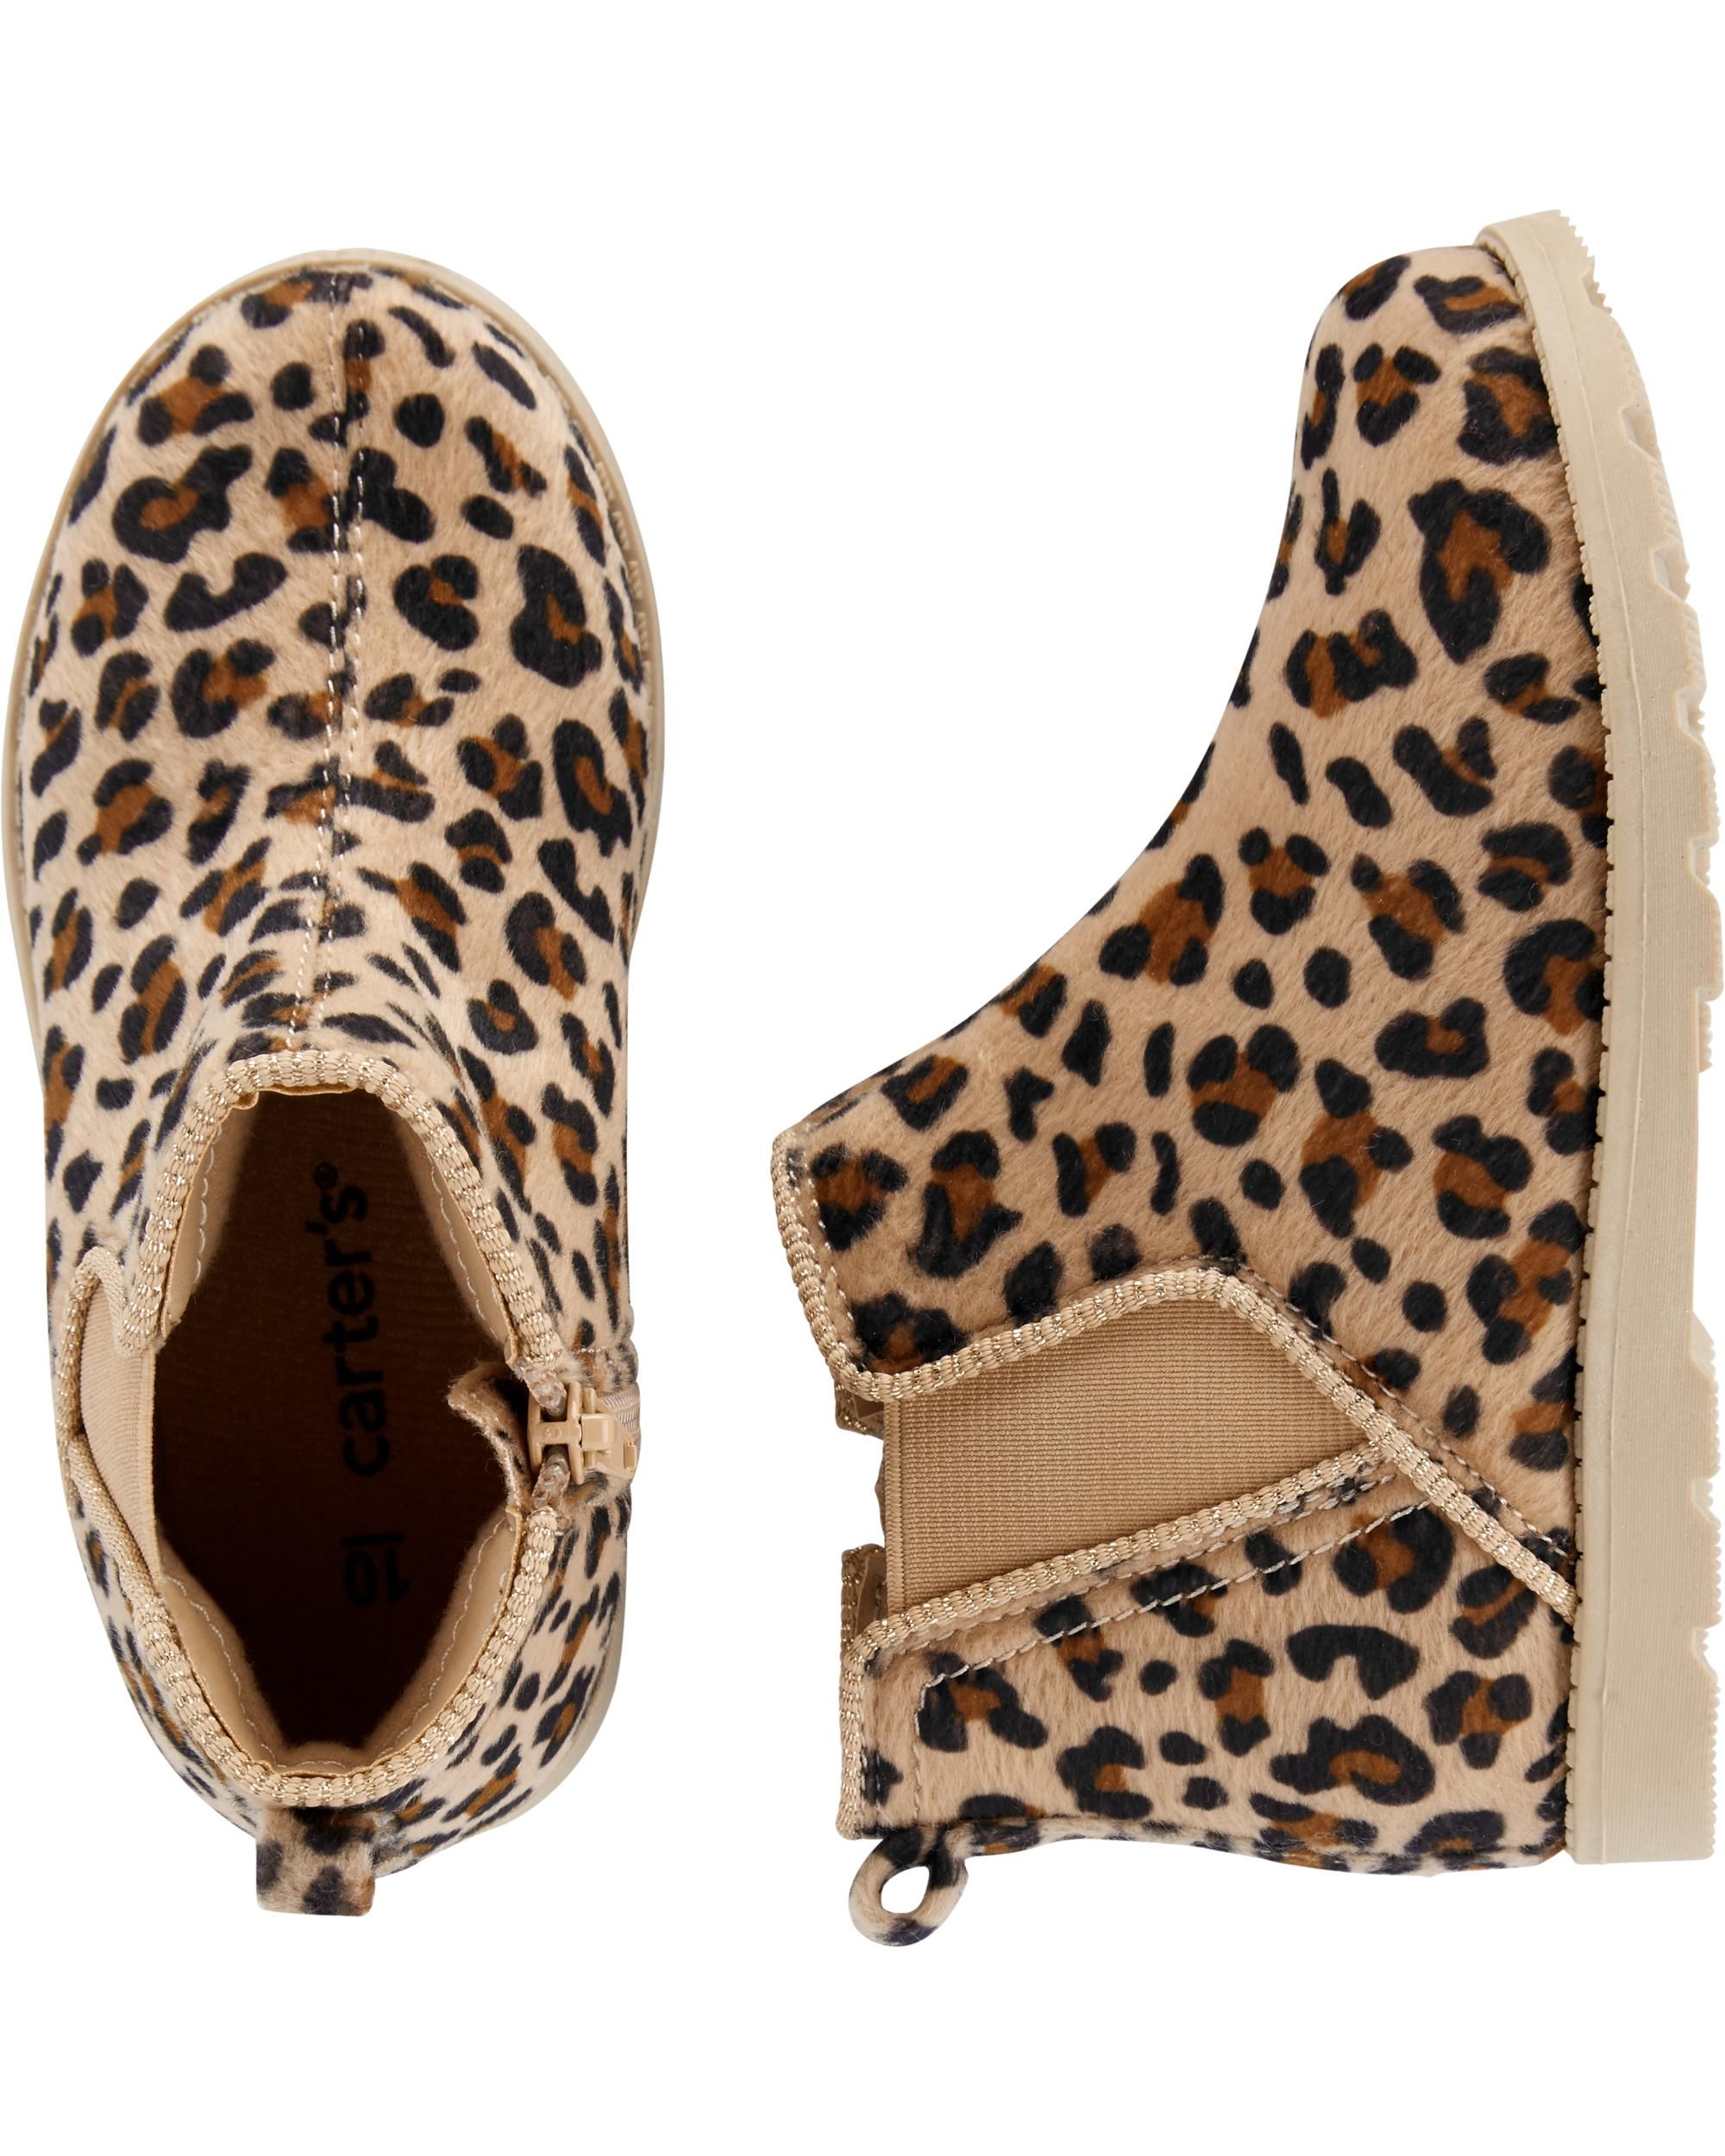 Carter's Leopard Ankle Boots | OshKosh B'gosh